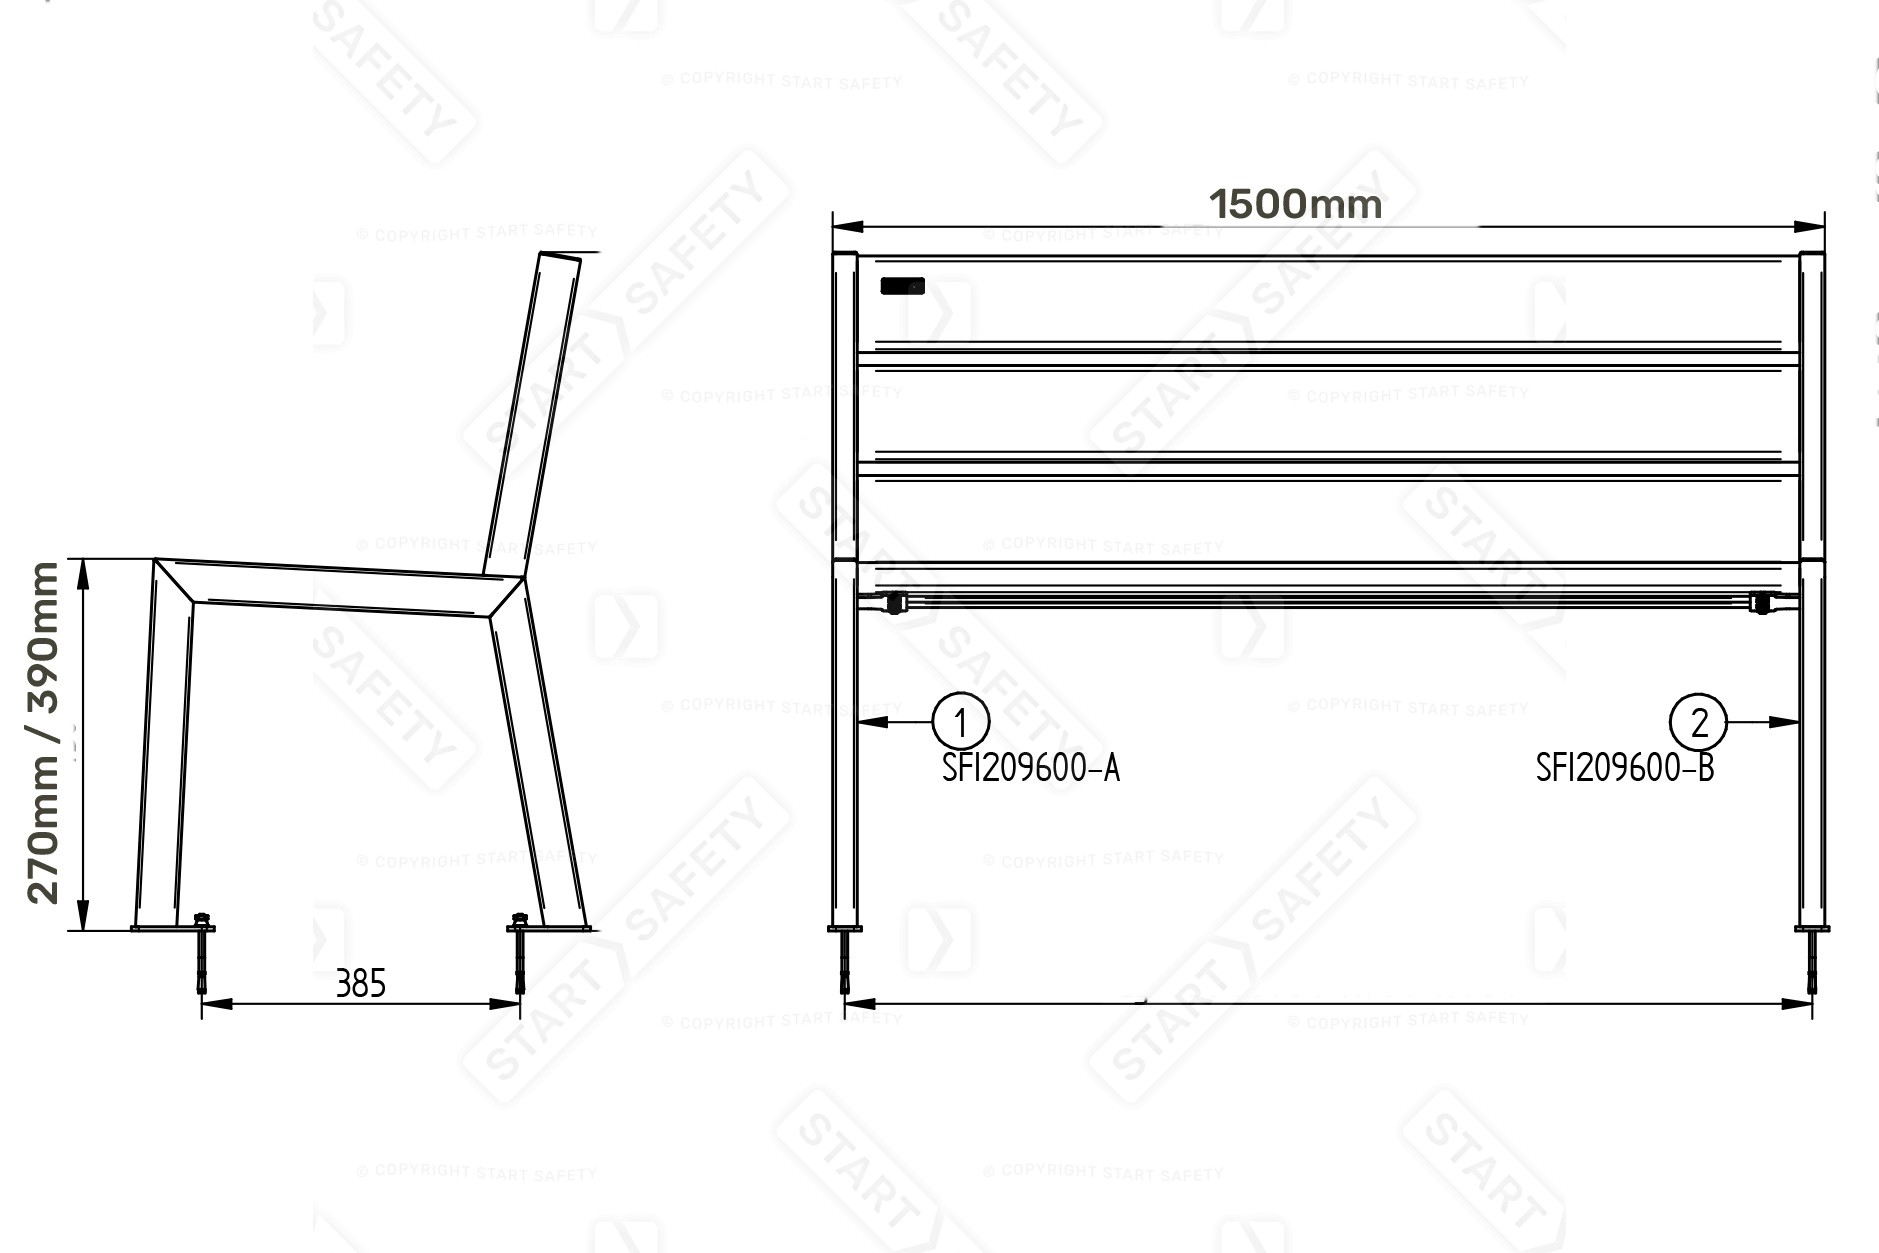 Procity Silaos Junior Bench For Primary School Students Installation Diagram